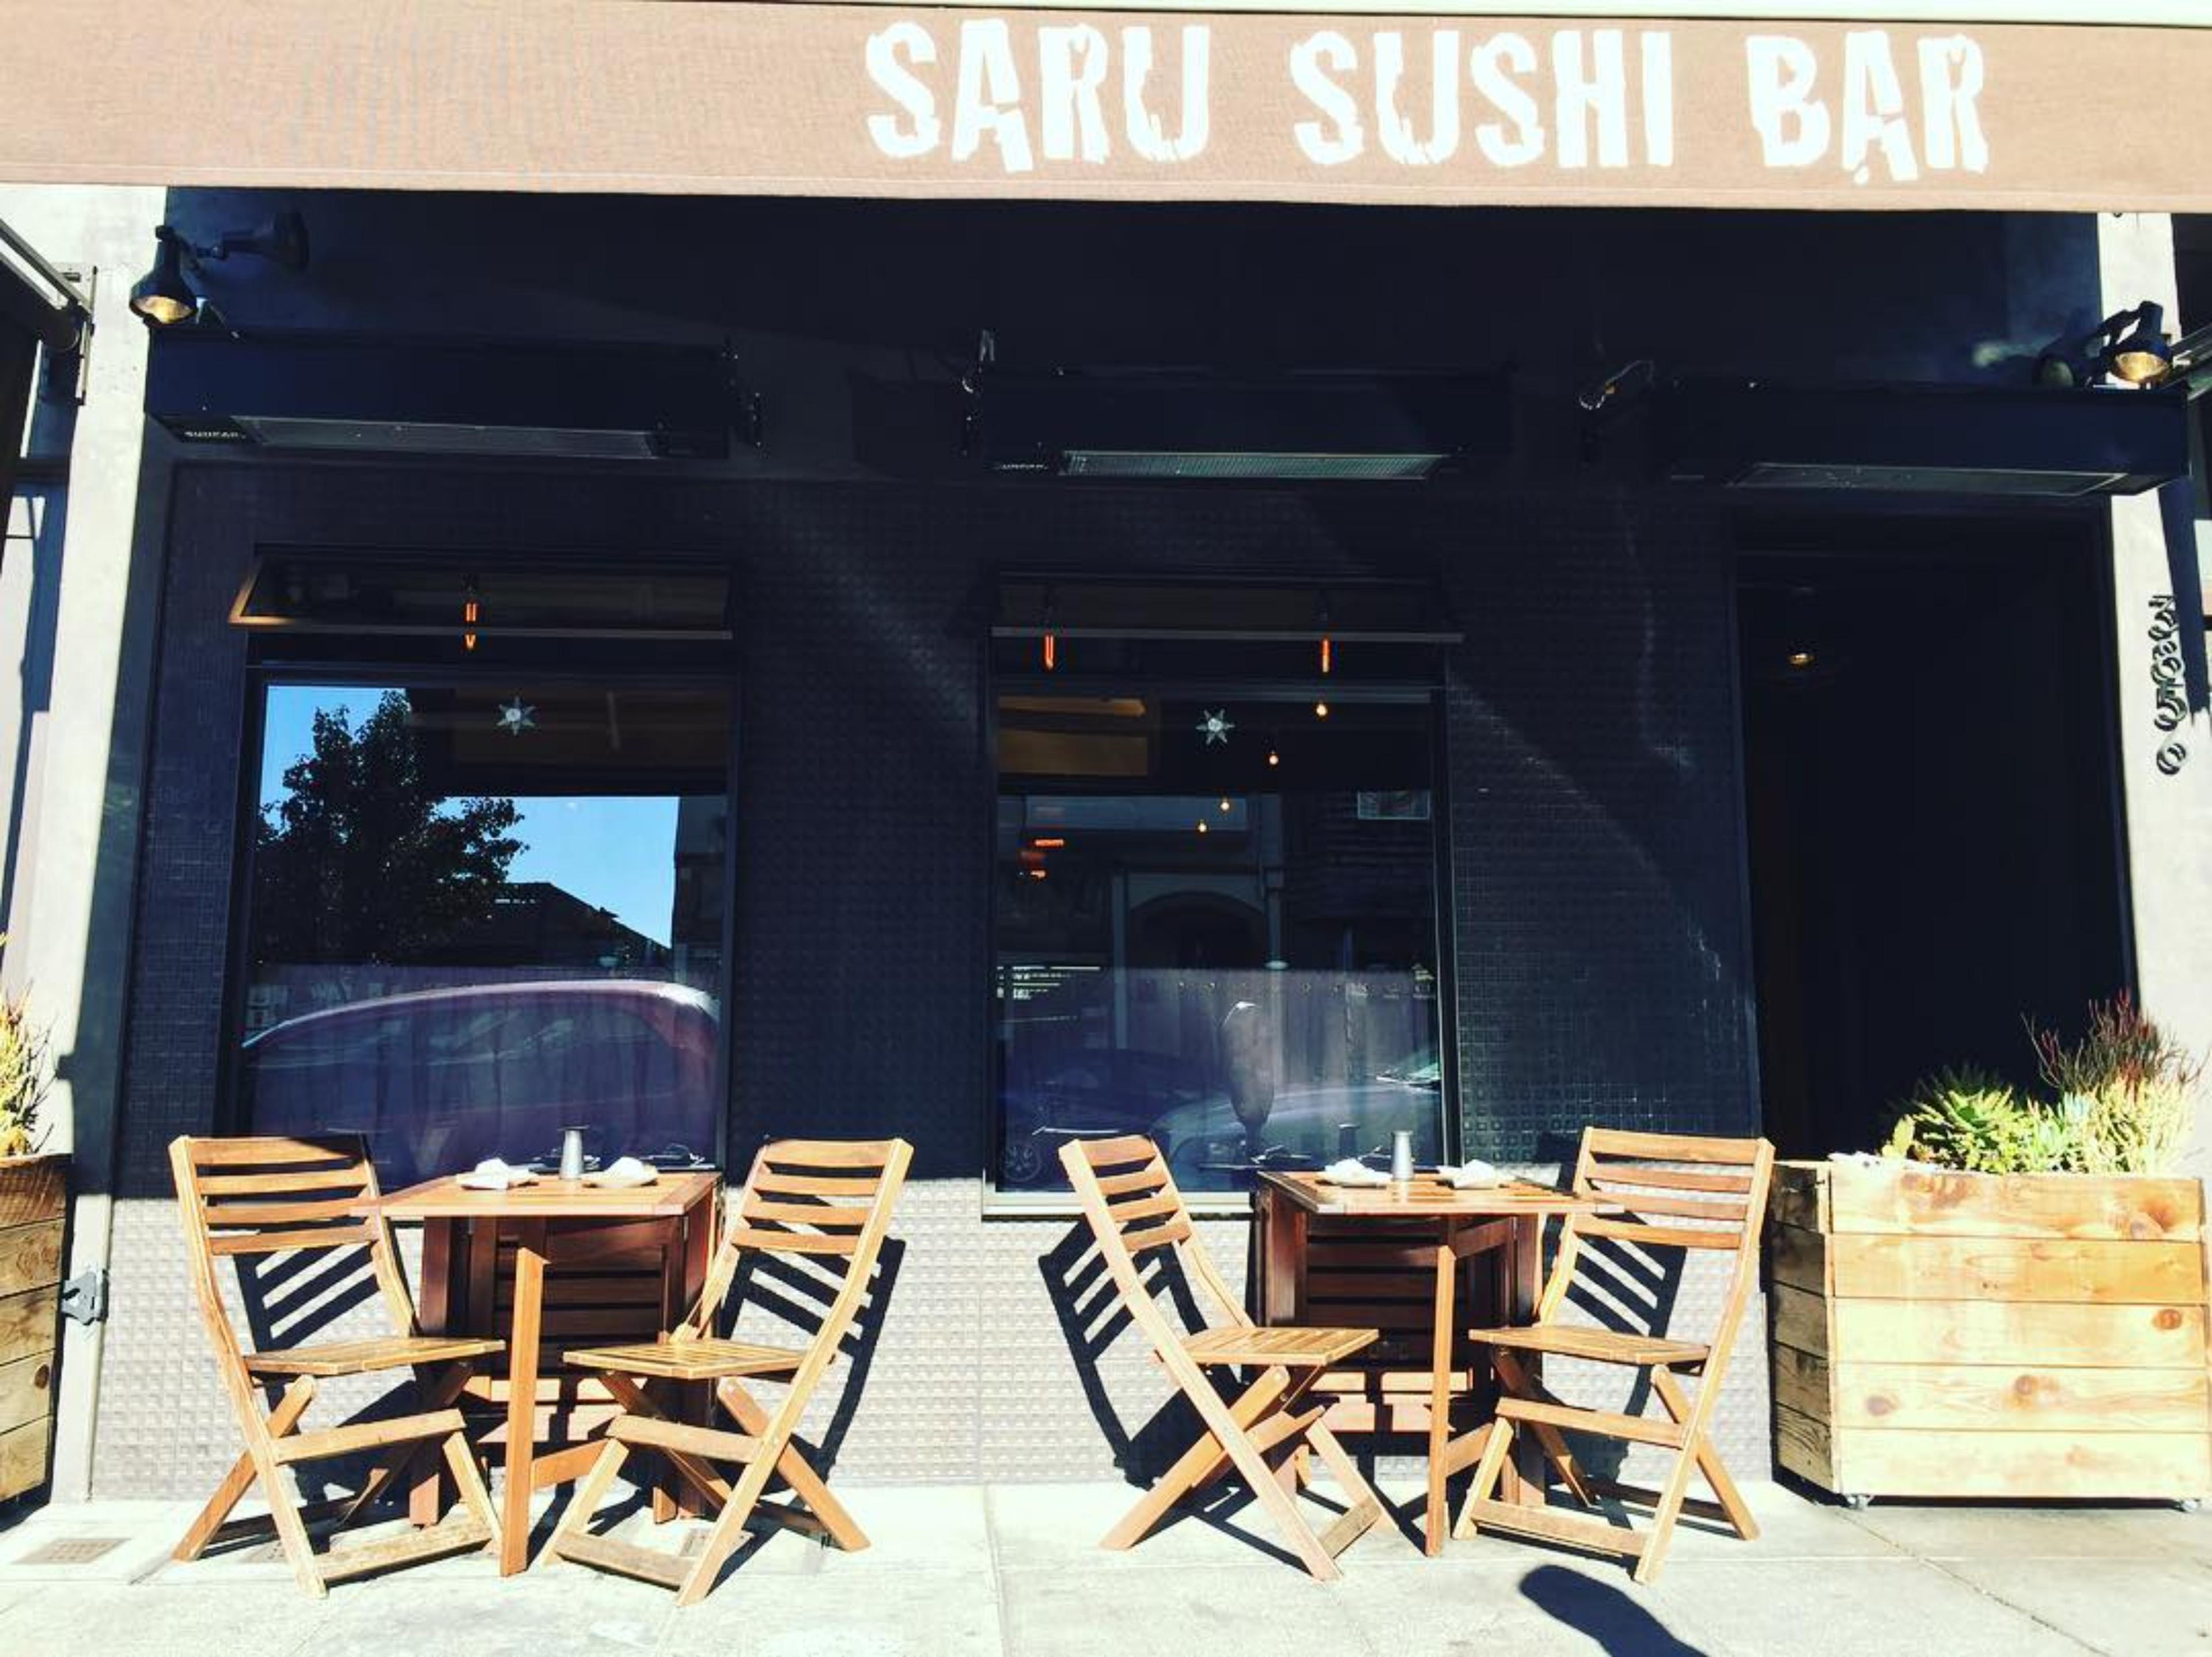 Saru Sushi Bar - Noe Valley